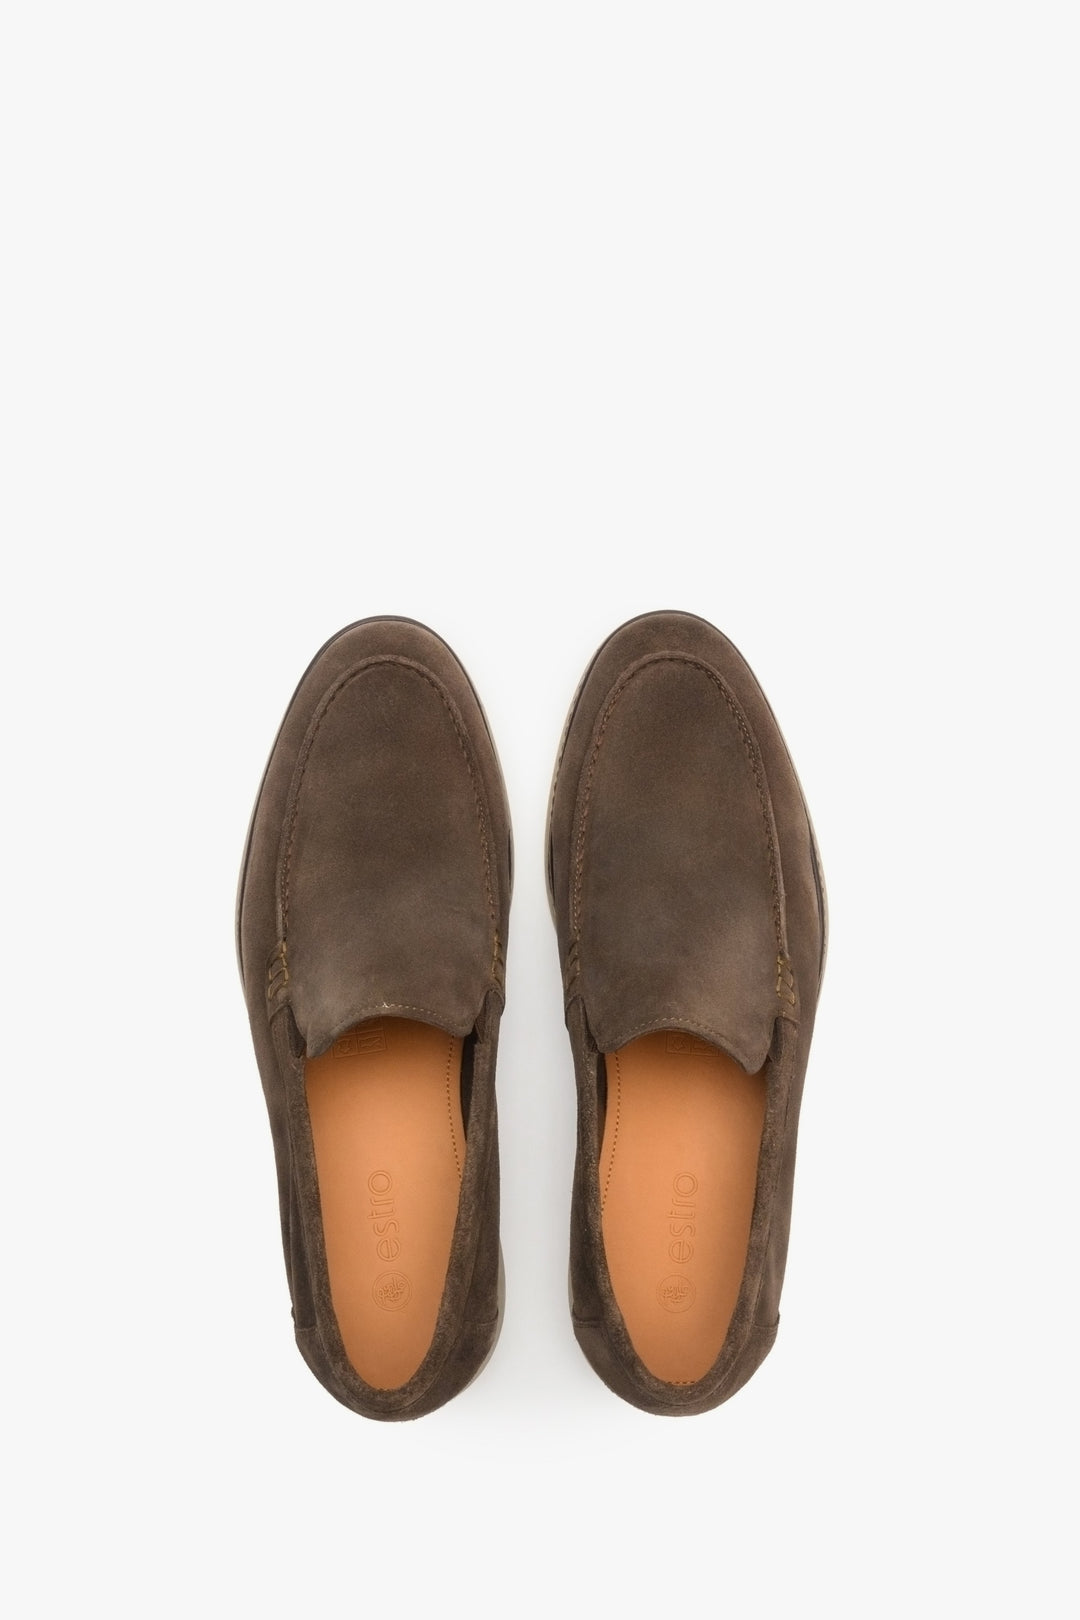 Estro men's brown velvet loafers - top view shoe presentation.